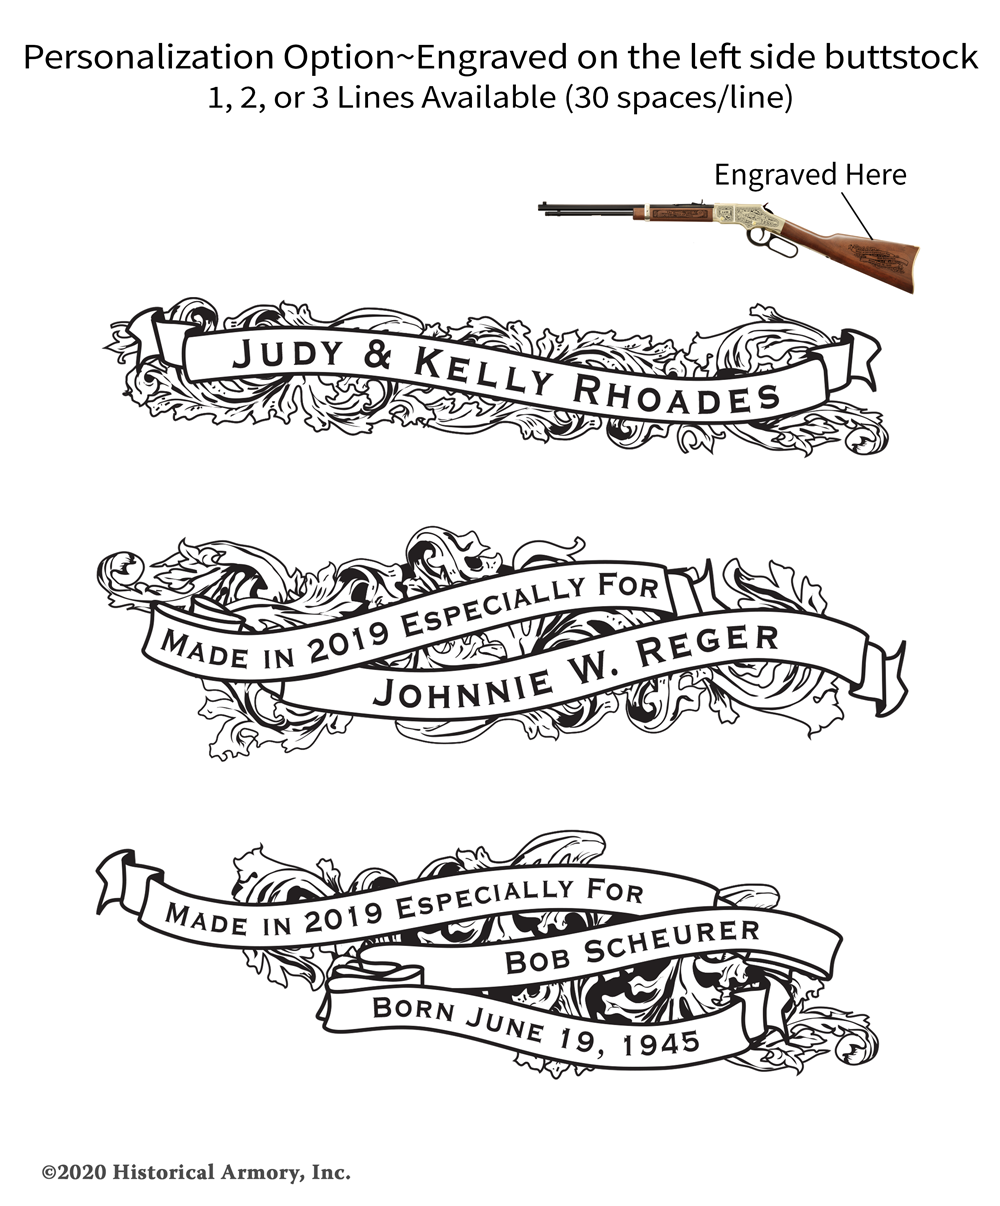 Prince Edward County Virginia Engraved Rifle